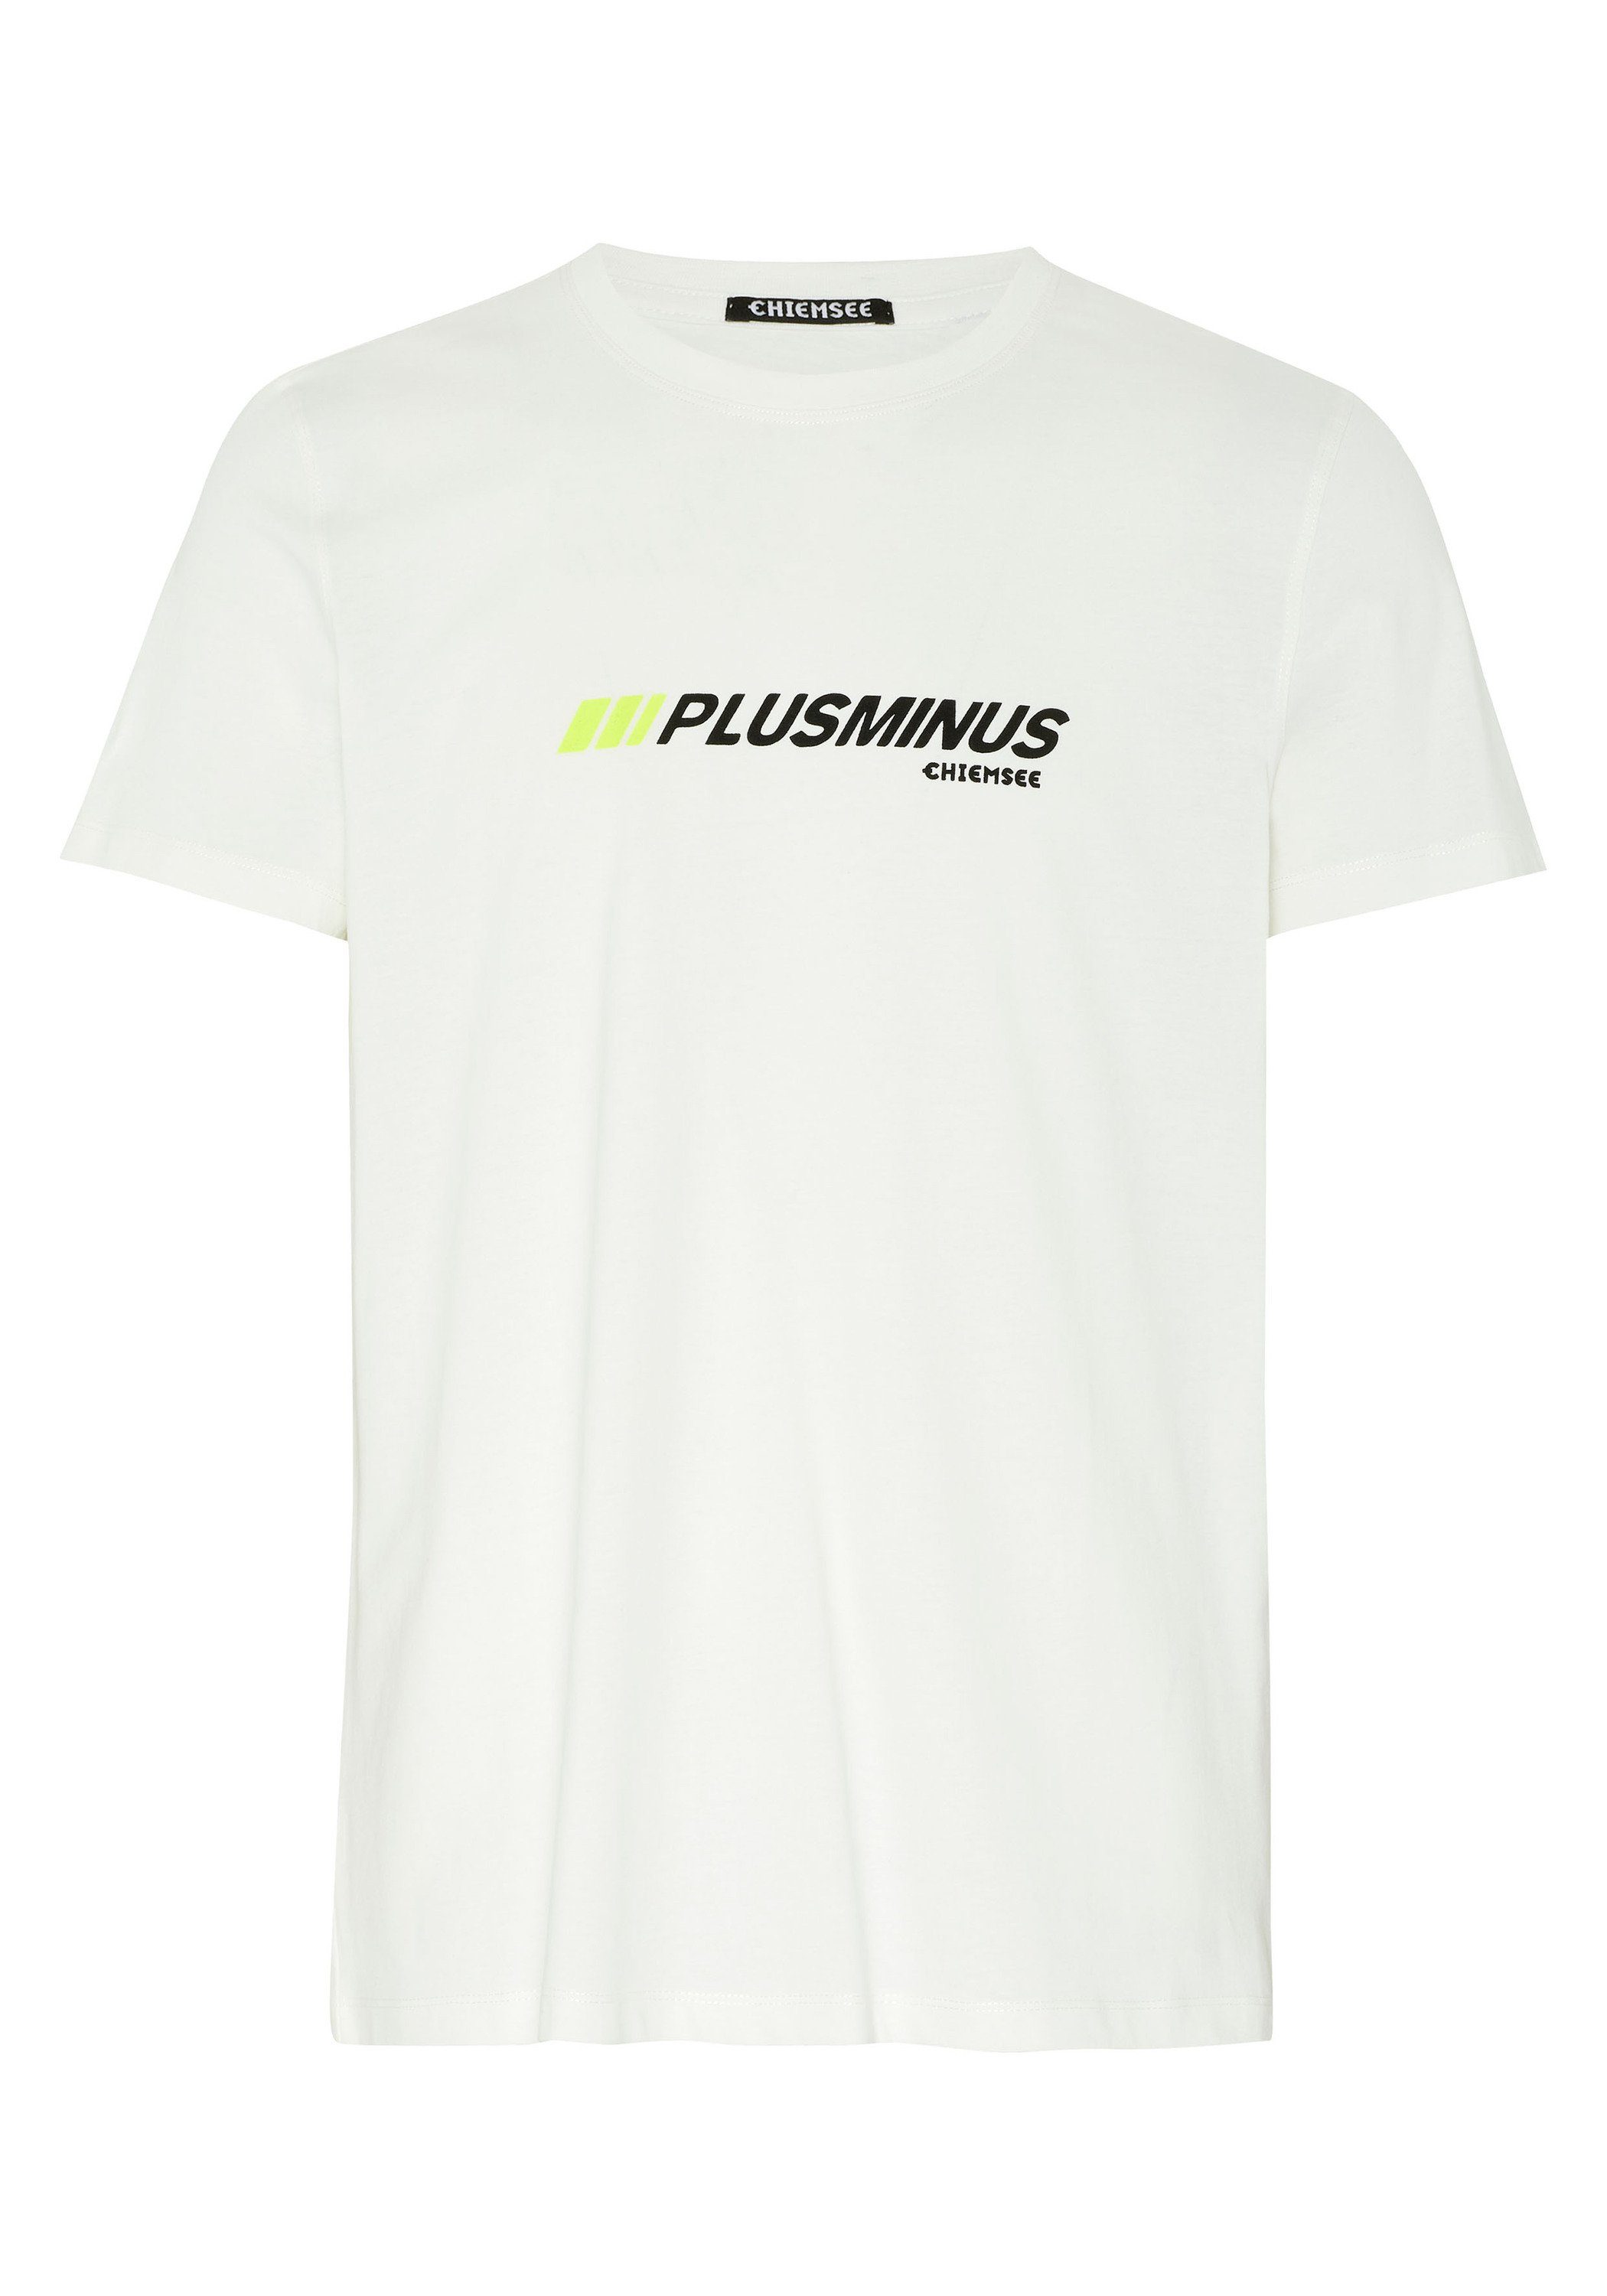 Chiemsee Print-Shirt T-Shirt Star 1 White PLUS-MINUS-Print mit